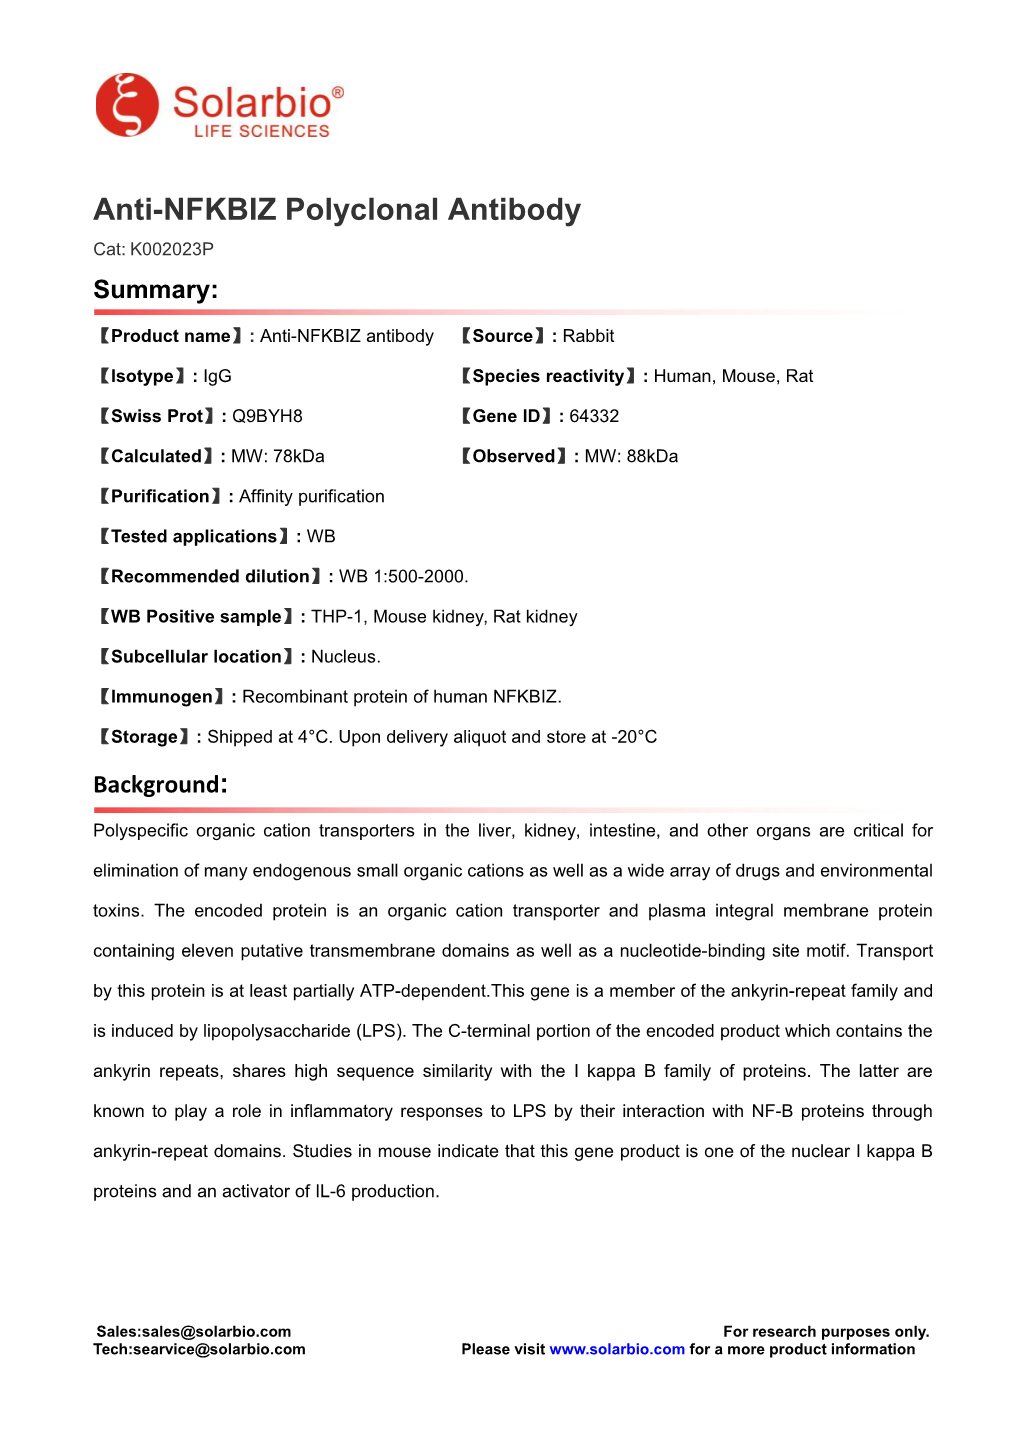 Anti-NFKBIZ Polyclonal Antibody Cat: K002023P Summary